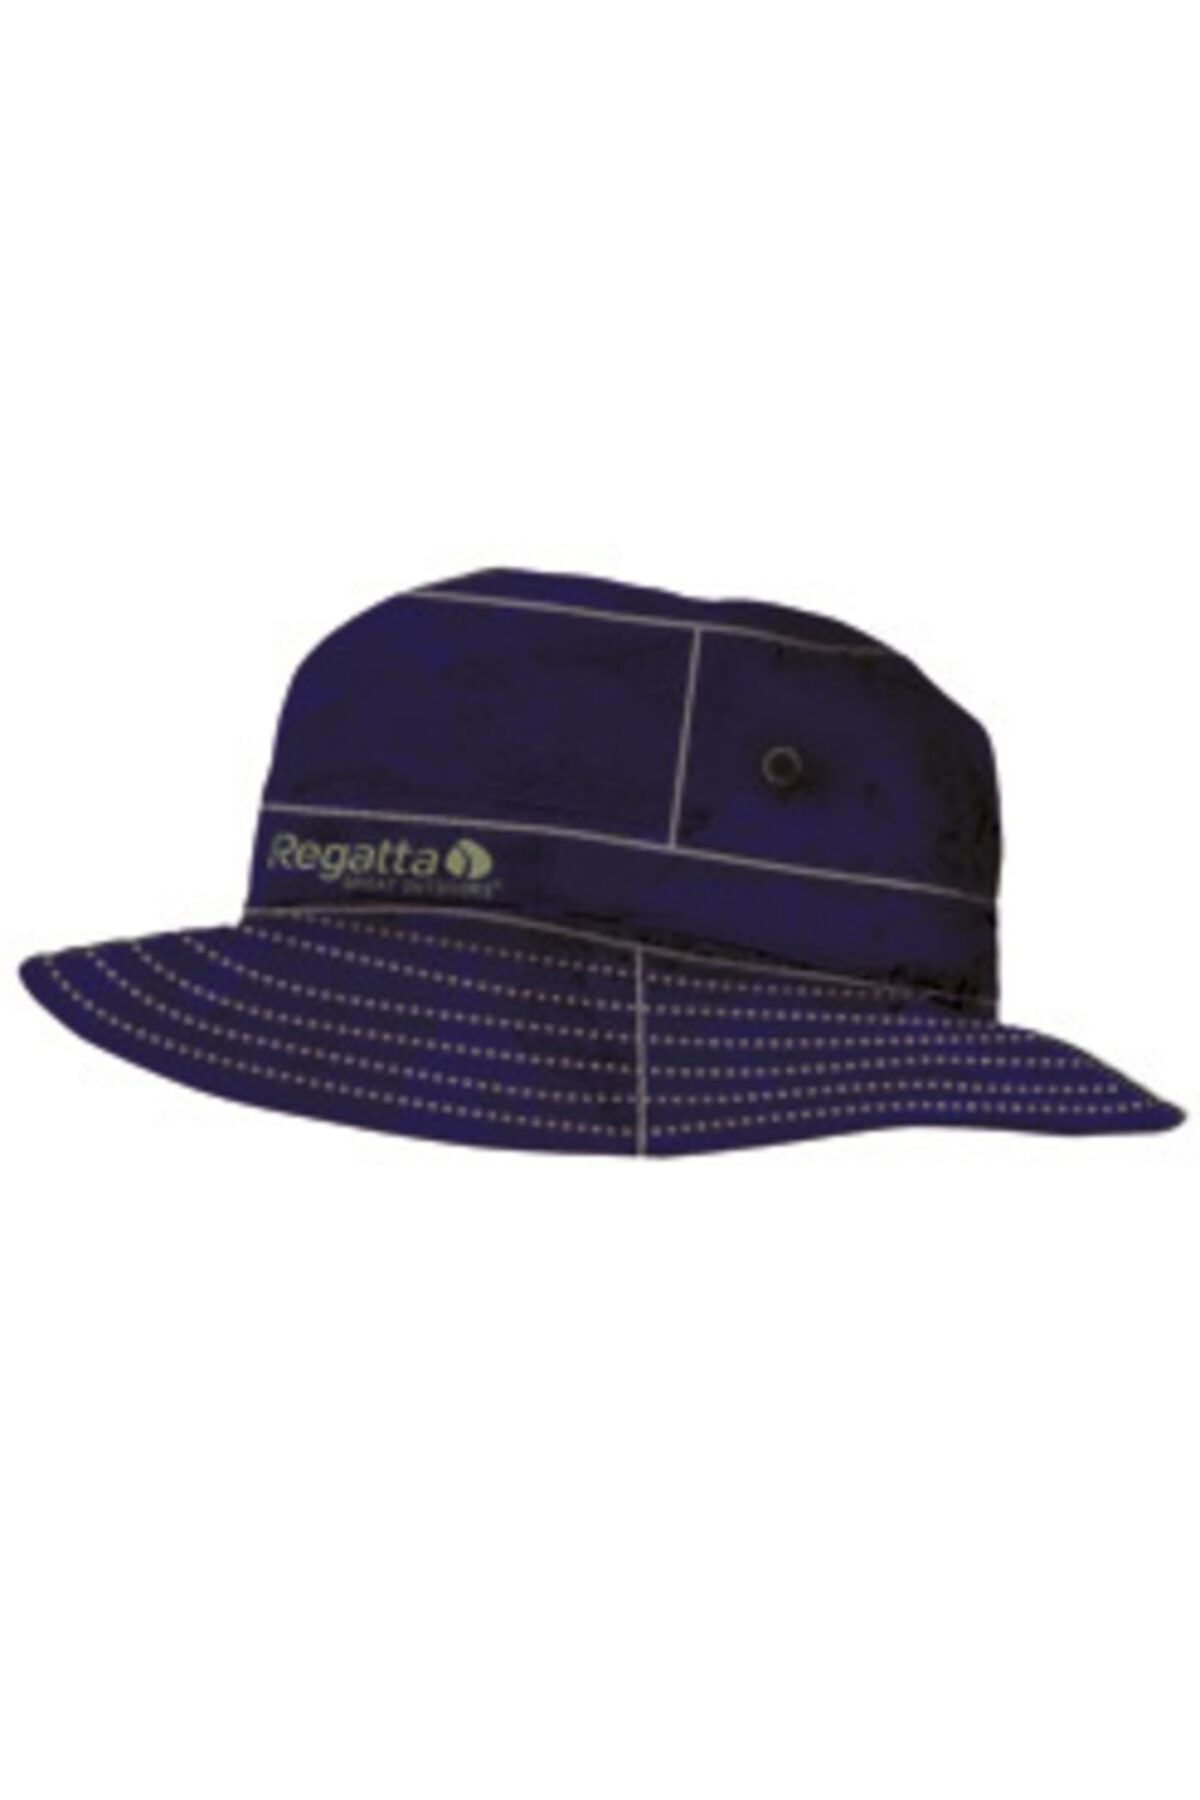 Regatta Unisex Lacivert Şapka